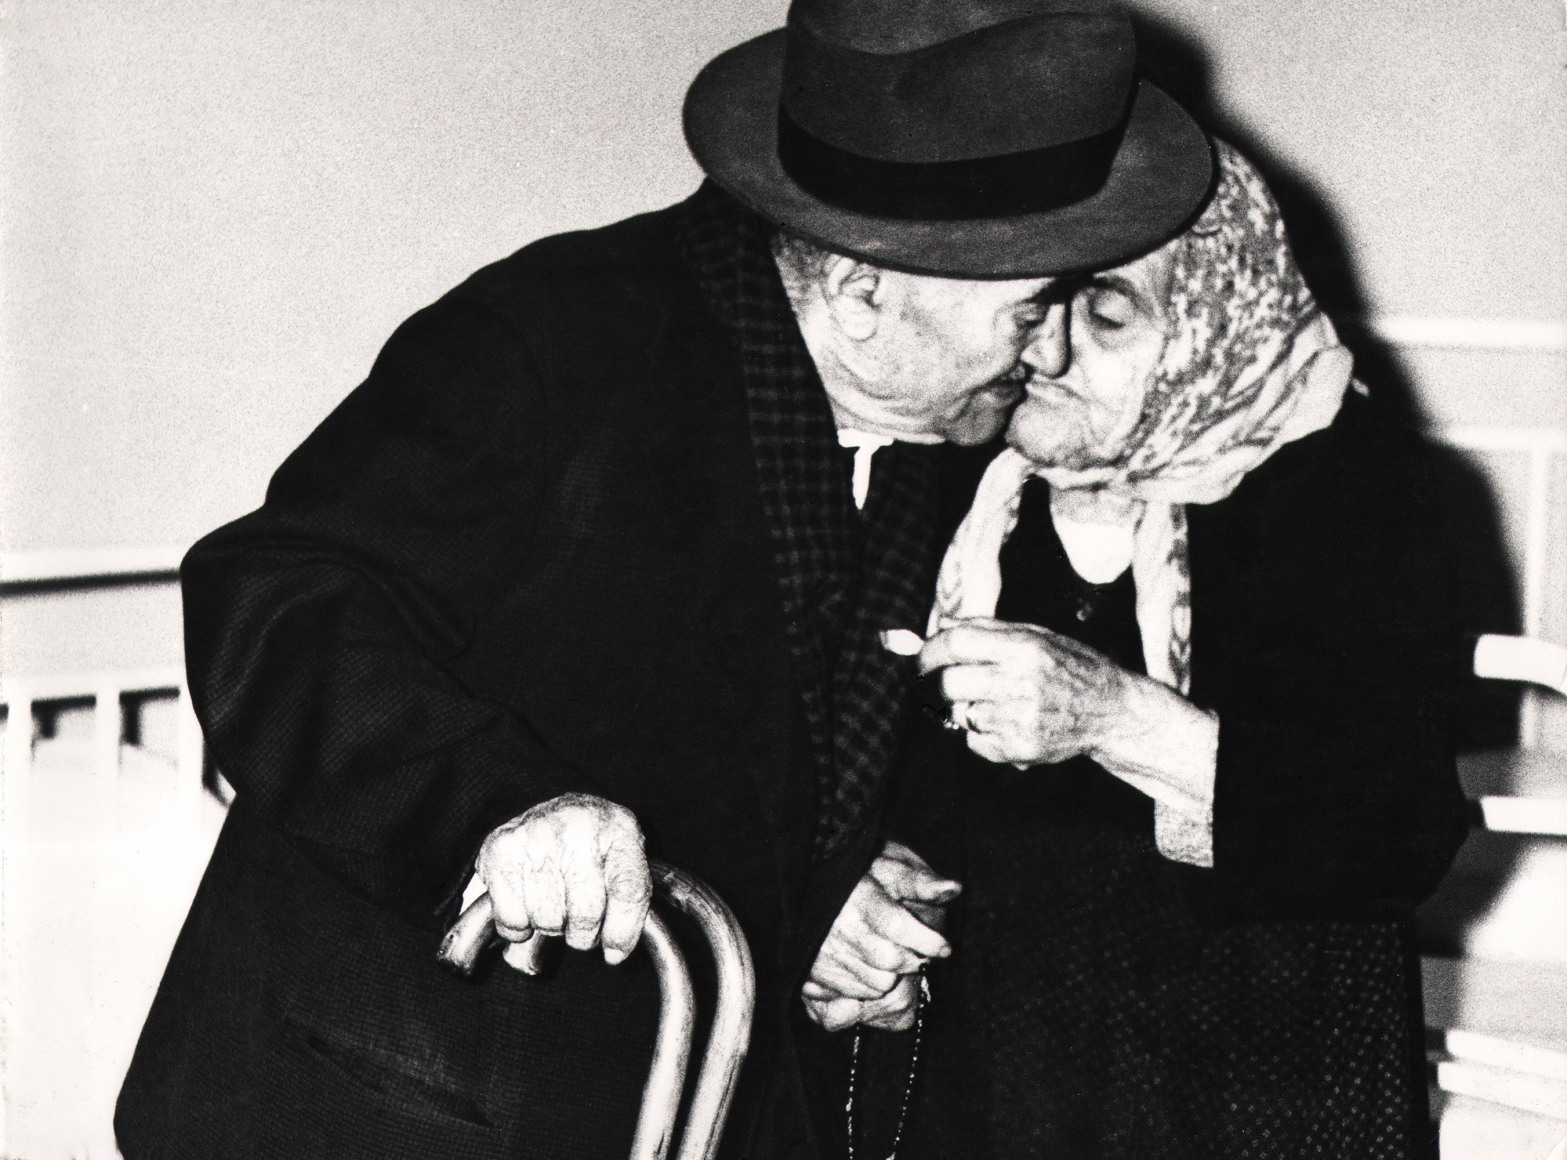 32. Mario Giacomelli, Verr&agrave; la morte e avr&agrave; i tuoi occhi, 1966&ndash;1968. High contrast image. An old couple in dark clothing kiss.